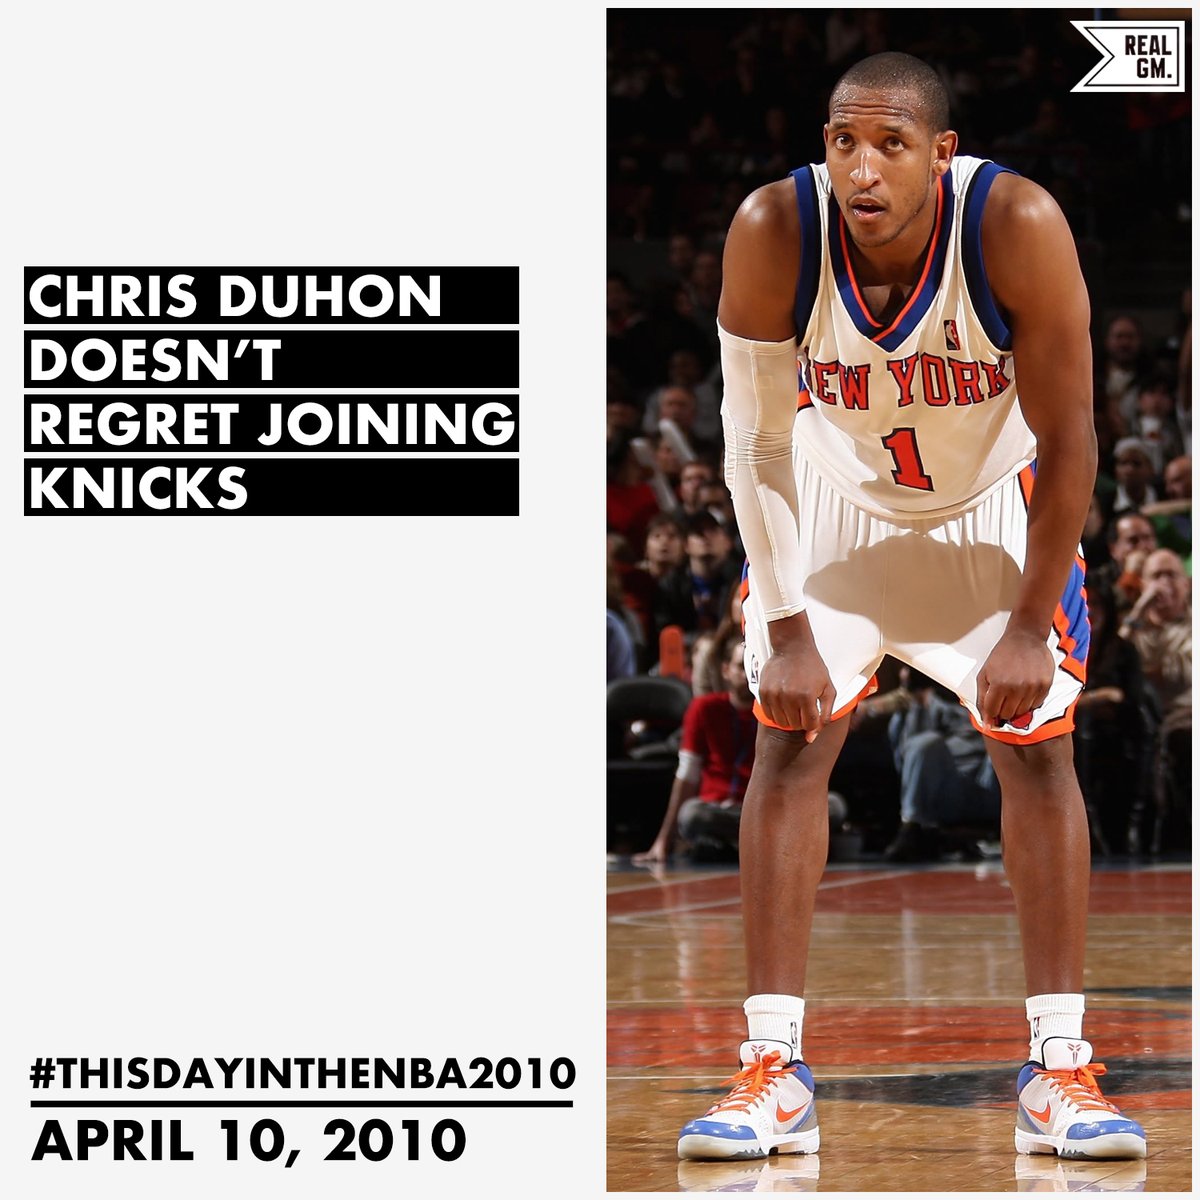  #ThisDayInTheNBA2010April 10, 2010Chris Duhon Doesn't Regret Joining Knicks https://basketball.realgm.com/wiretap/203209/Chris-Duhon-Doesnt-Regret-Joining-Knicks